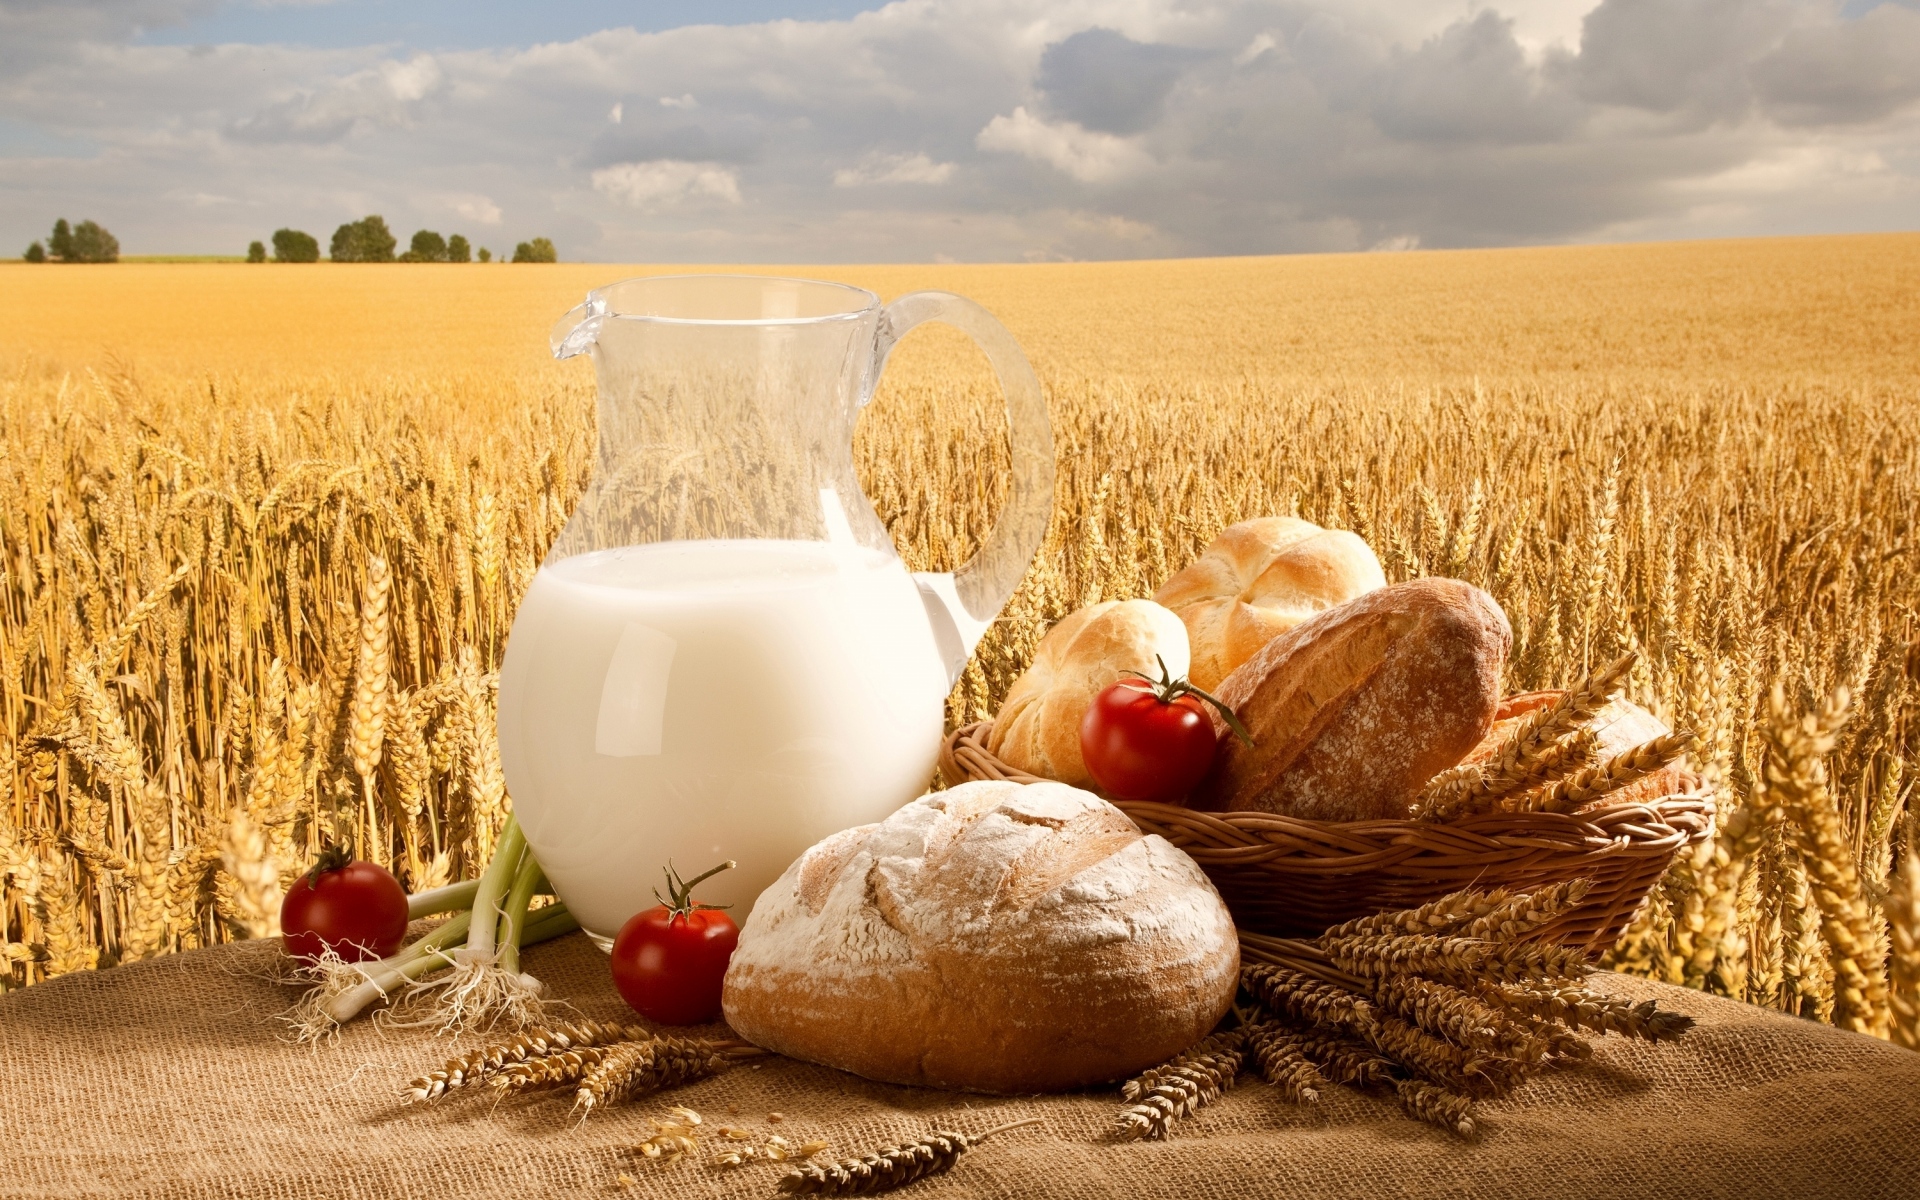 Картинки Молоко, кувшин, хлеб, рулеты, корзина, помидоры, лук, пшеница, поле, небо фото и обои на рабочий стол